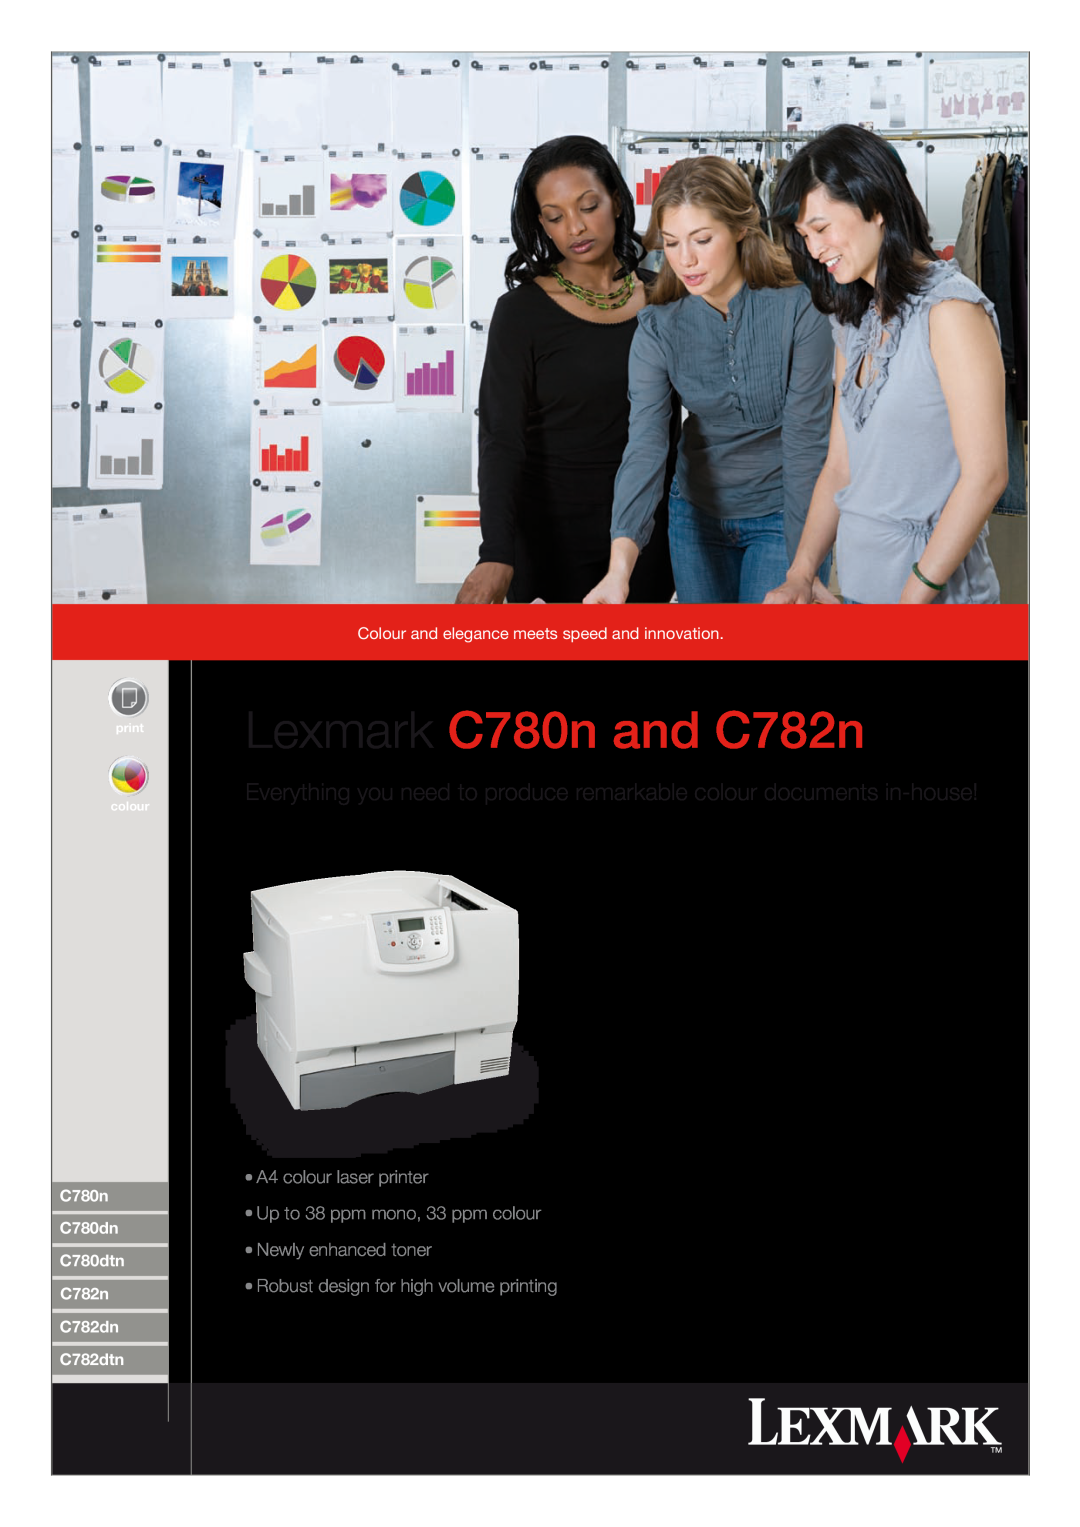 Lexmark manual Lexmark C780n and C782n, lA4 colour laser printer, lUp to 38 ppm mono, 33 ppm colour, print colour 